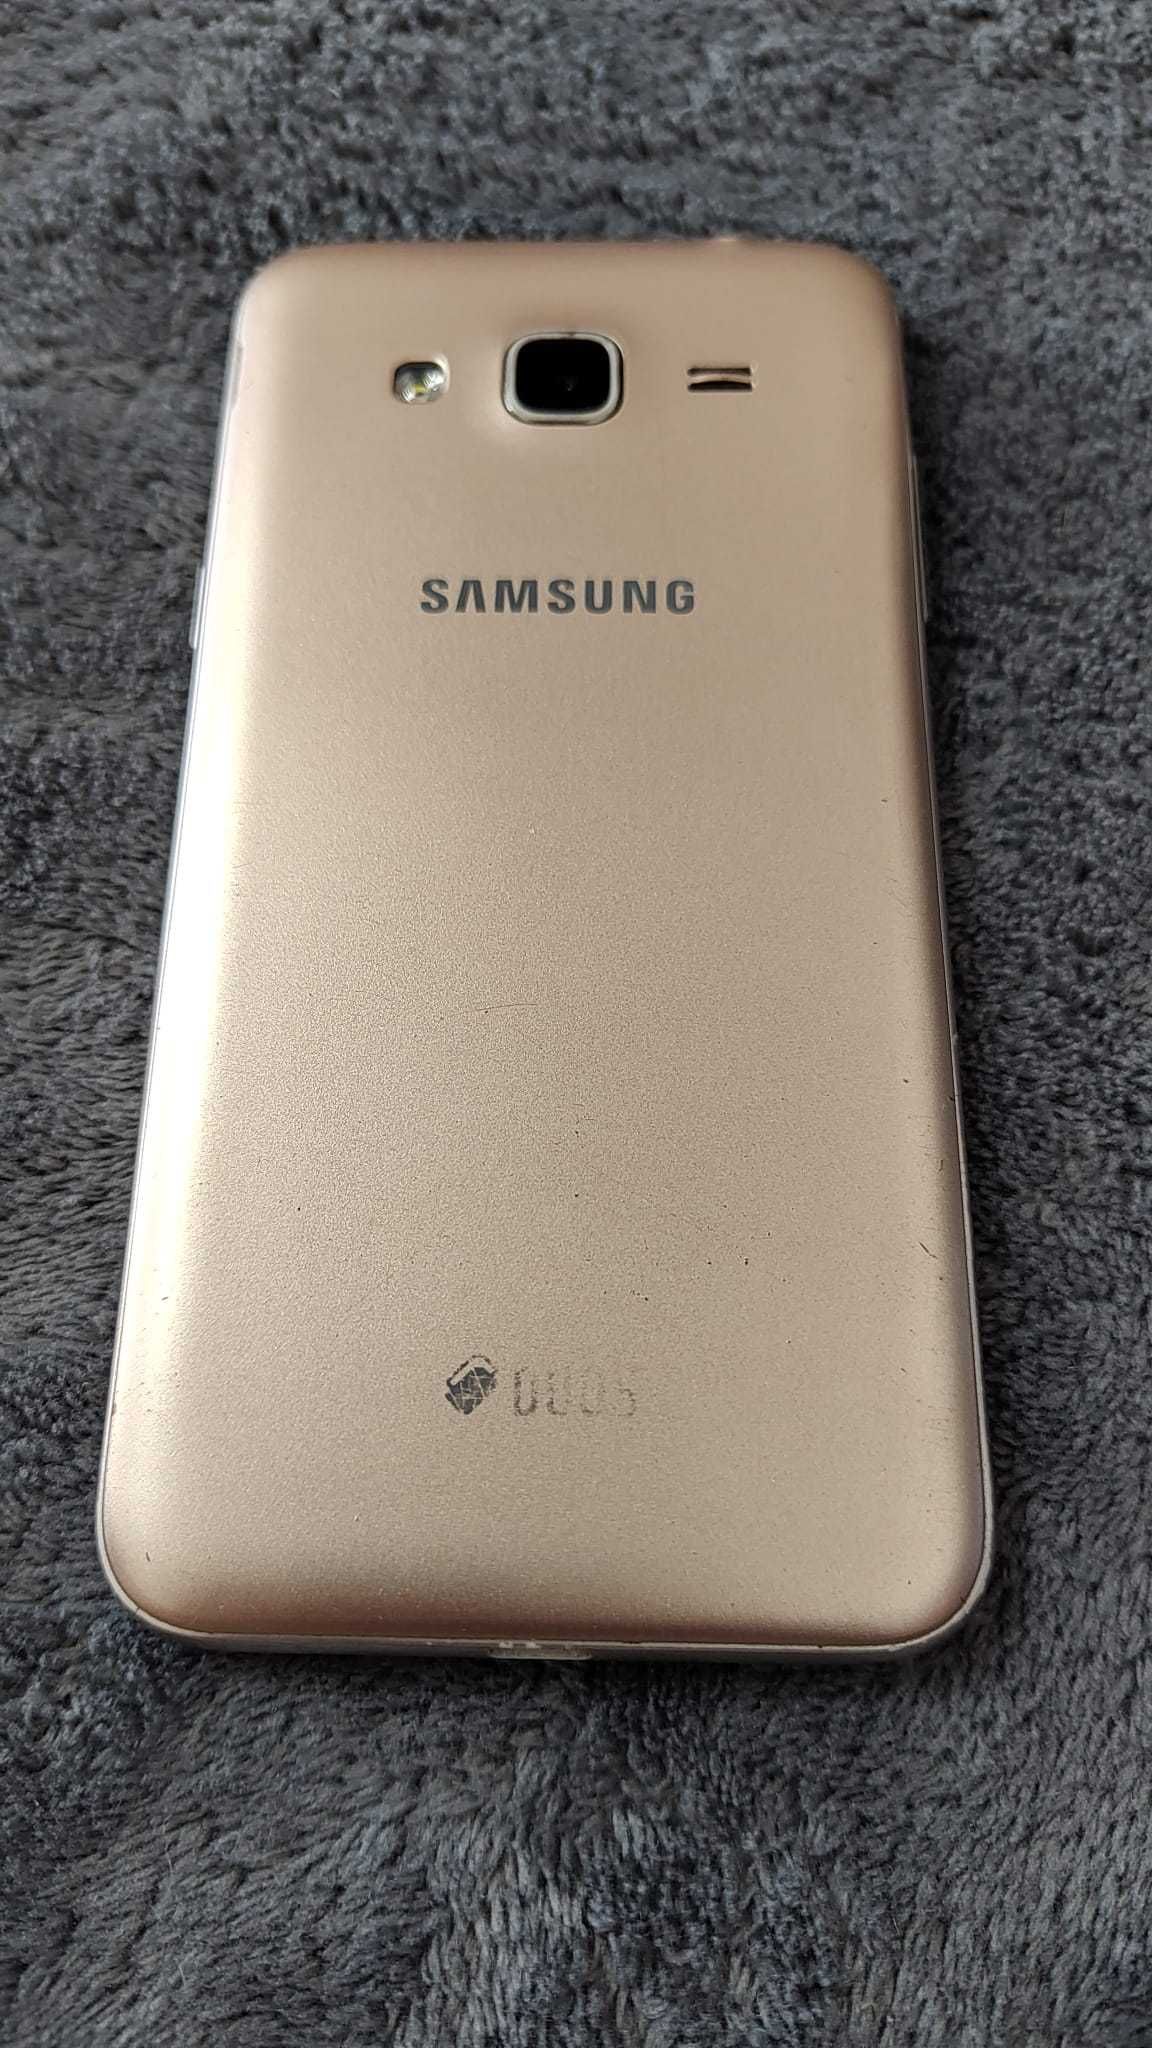 Samsung Galaxy J3 2016 defect